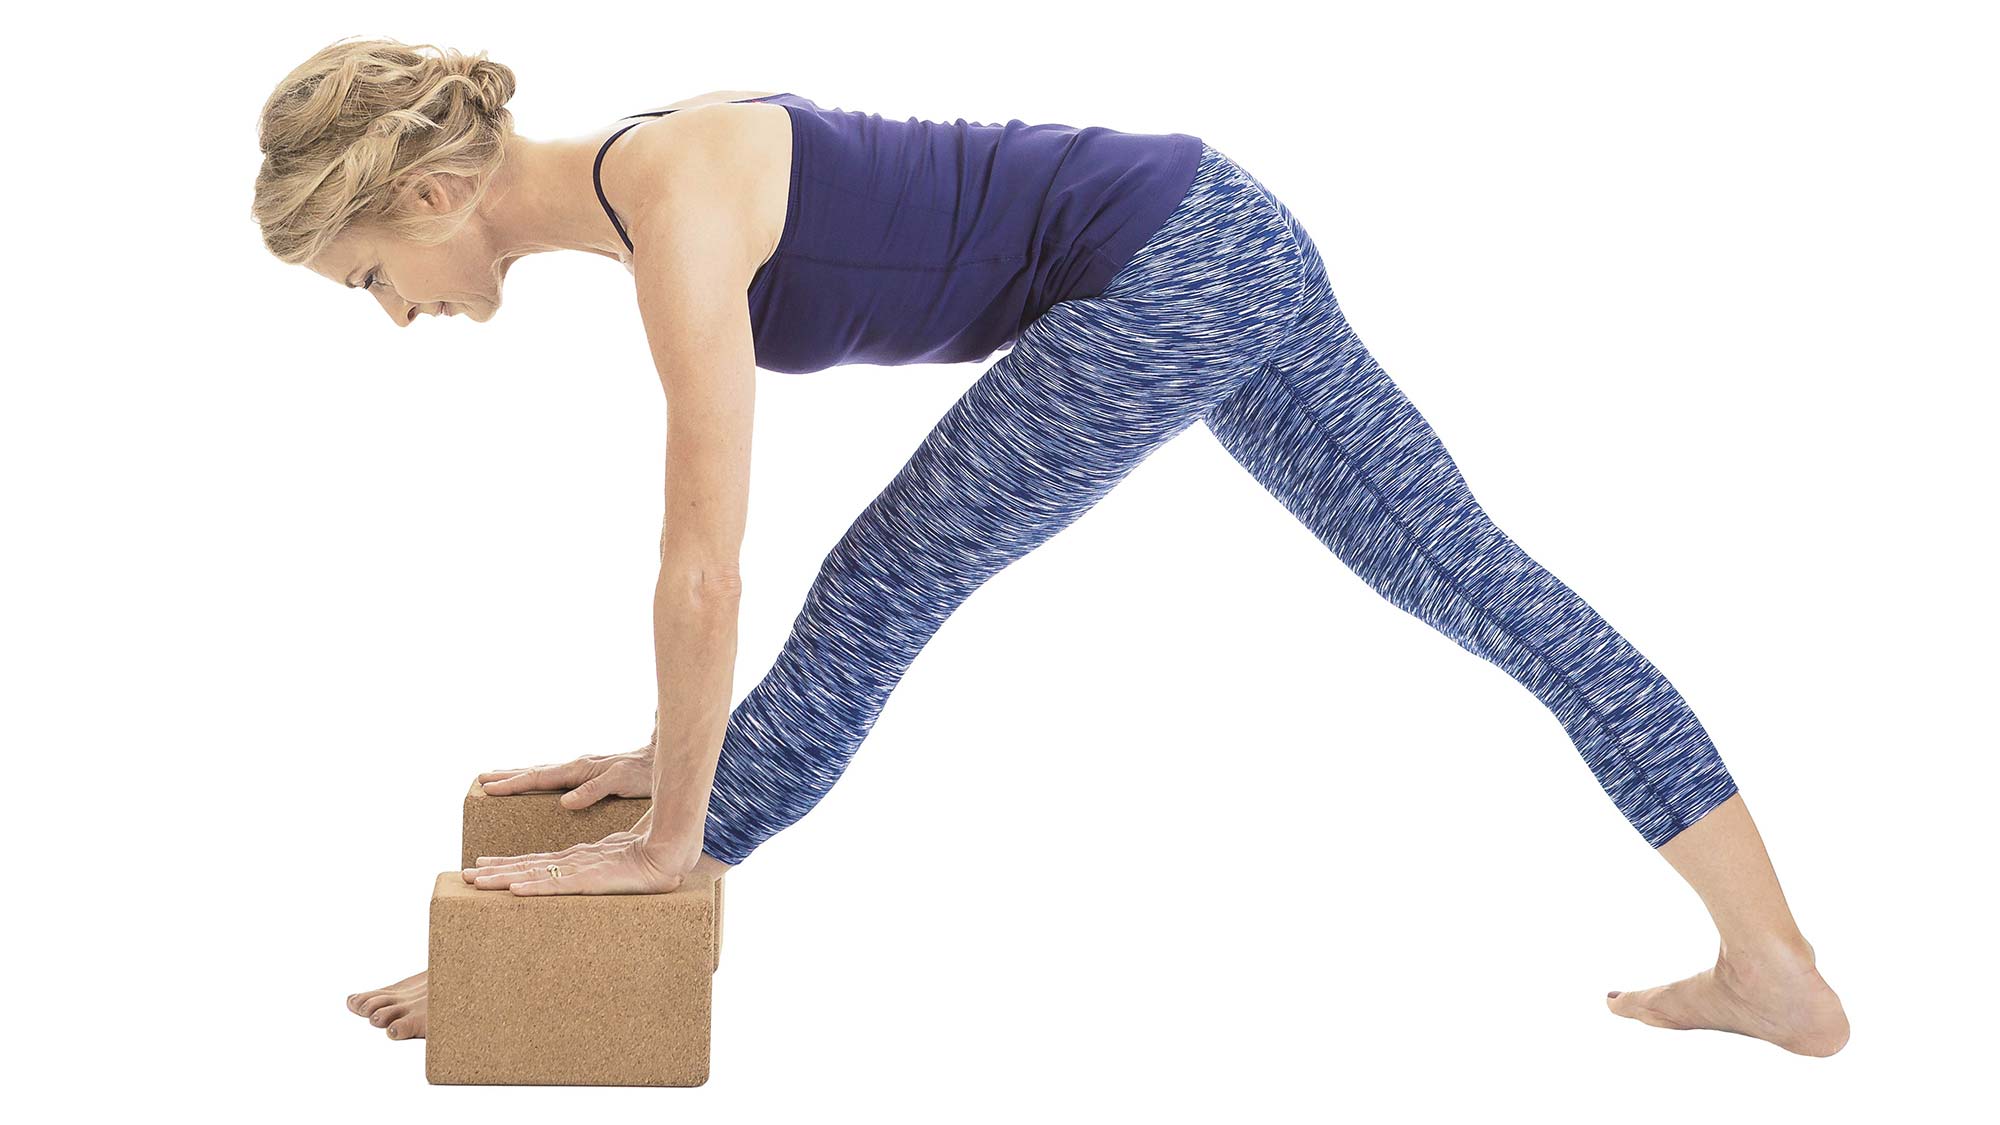 Yoga poses can relieve sciatica pain | FOX 5 San Diego & KUSI News